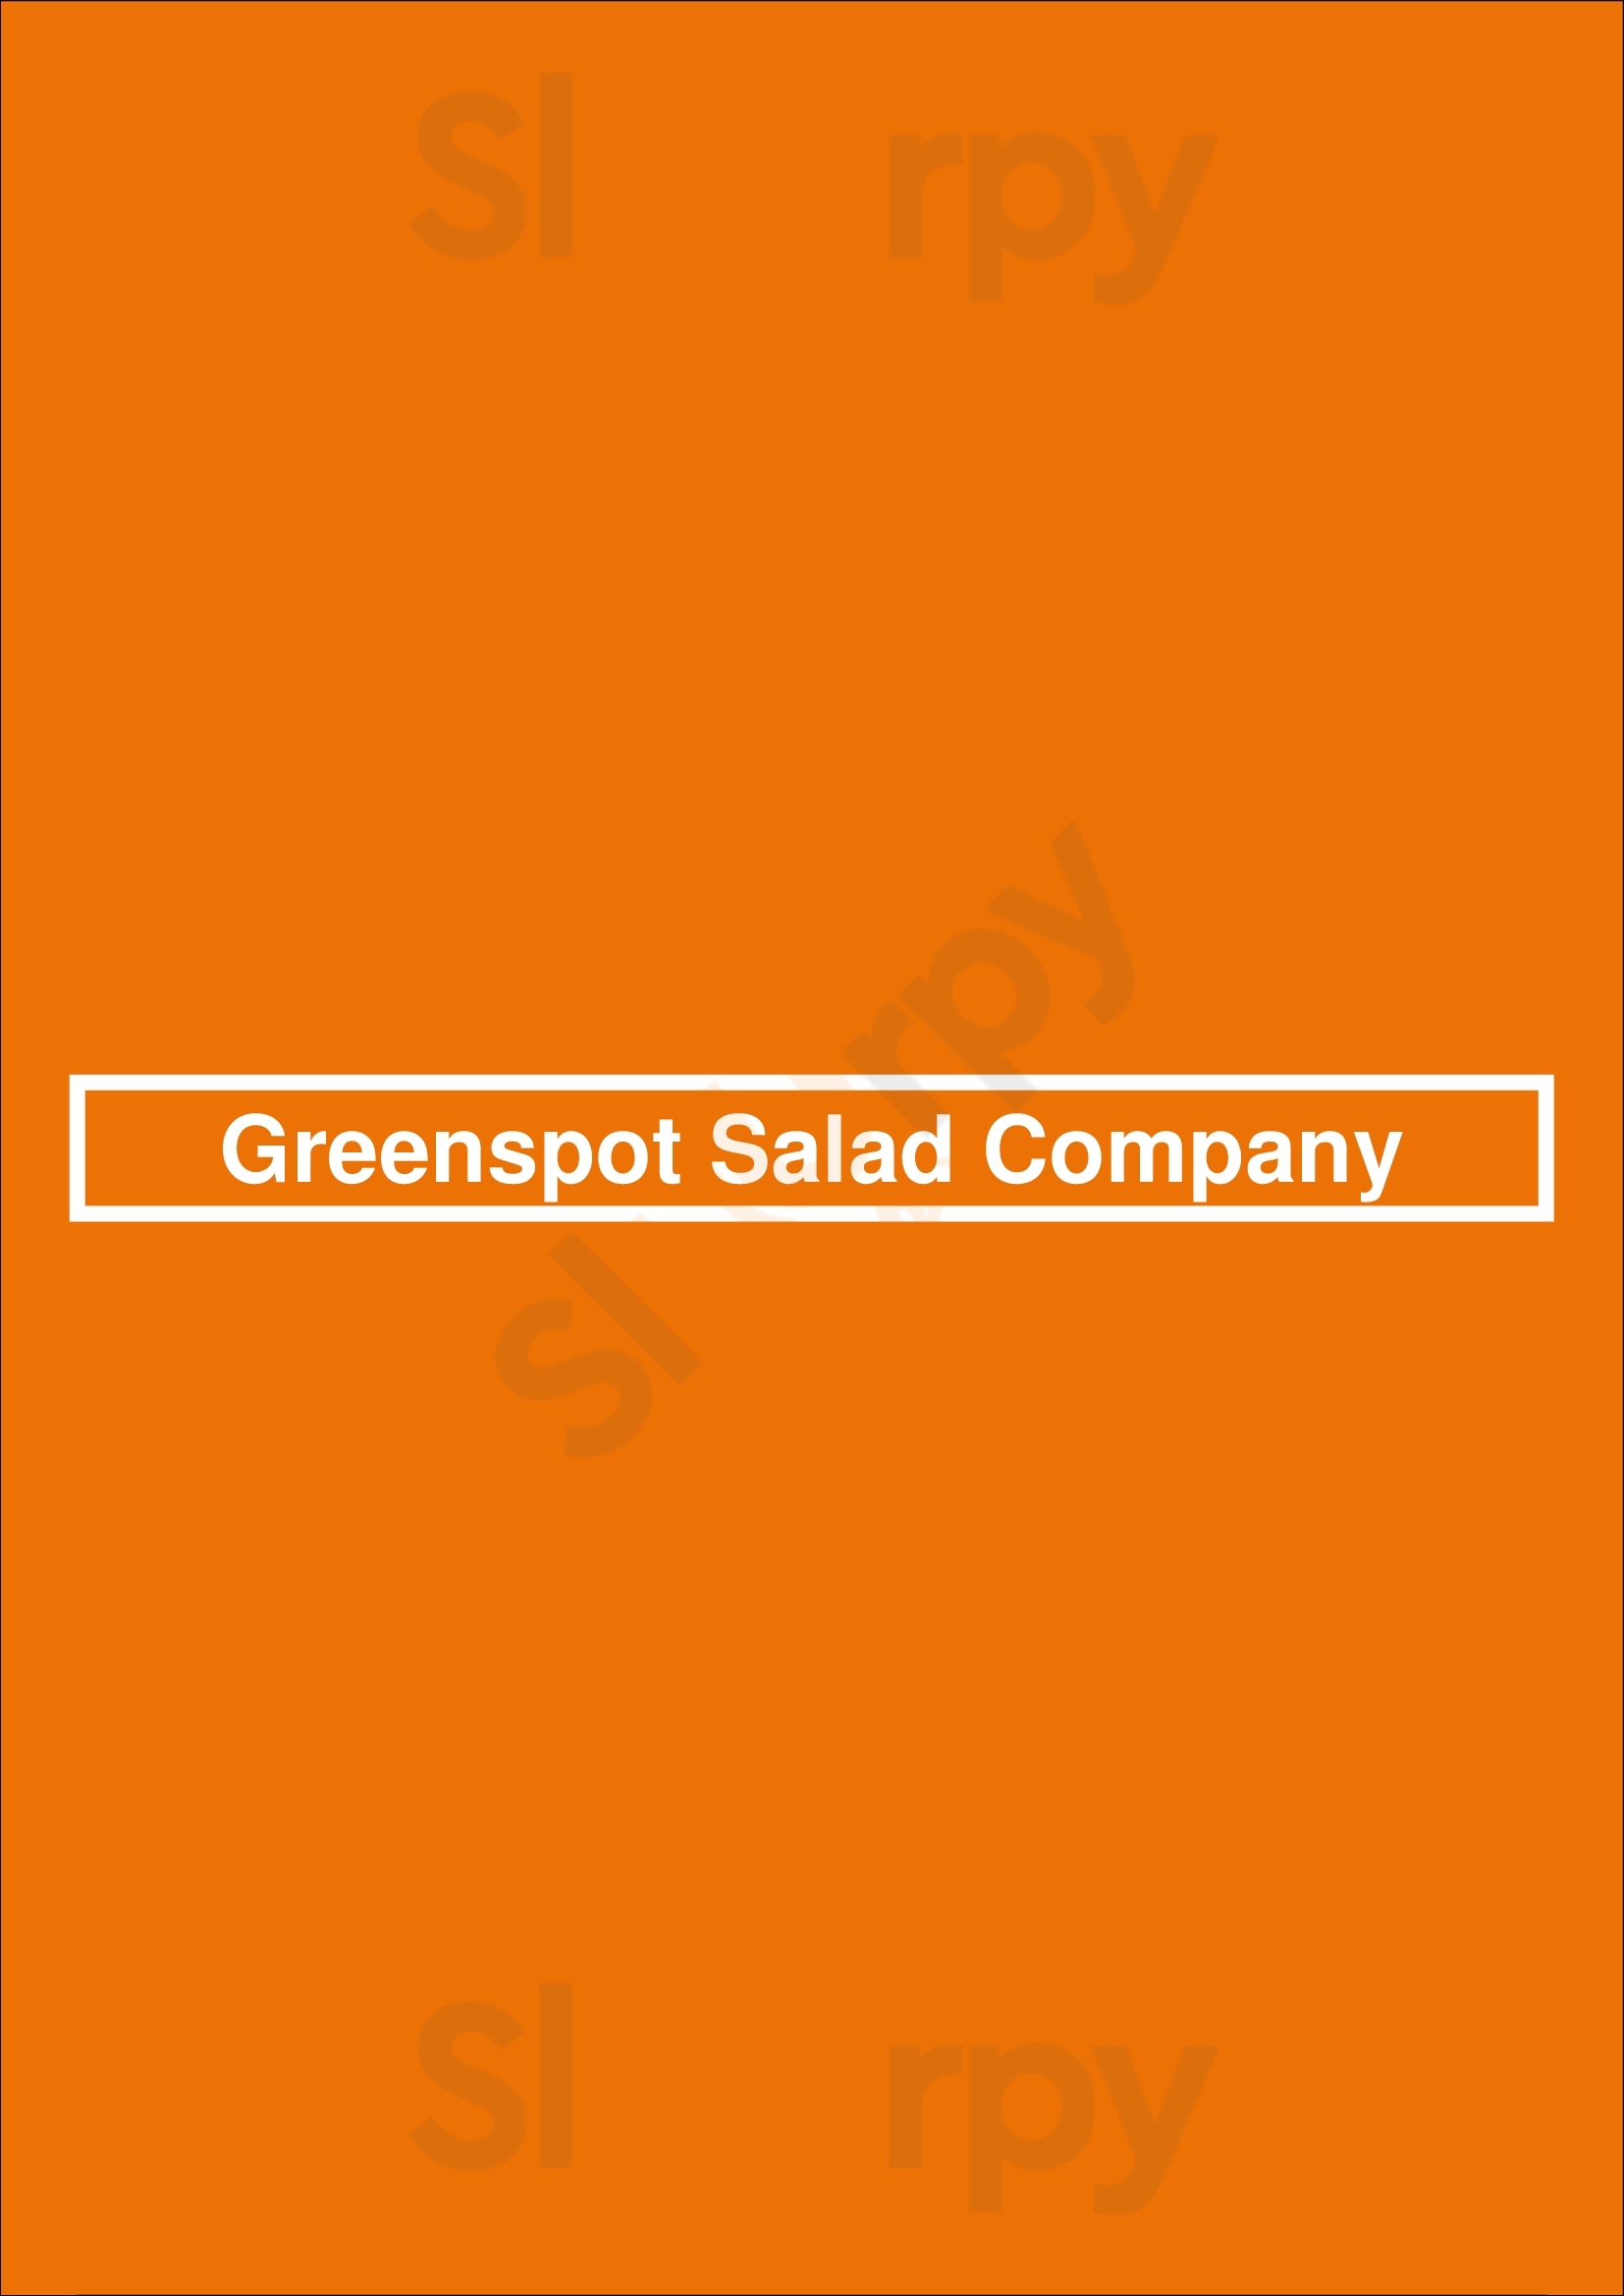 Greenspot Salad Company La Jolla Menu - 1